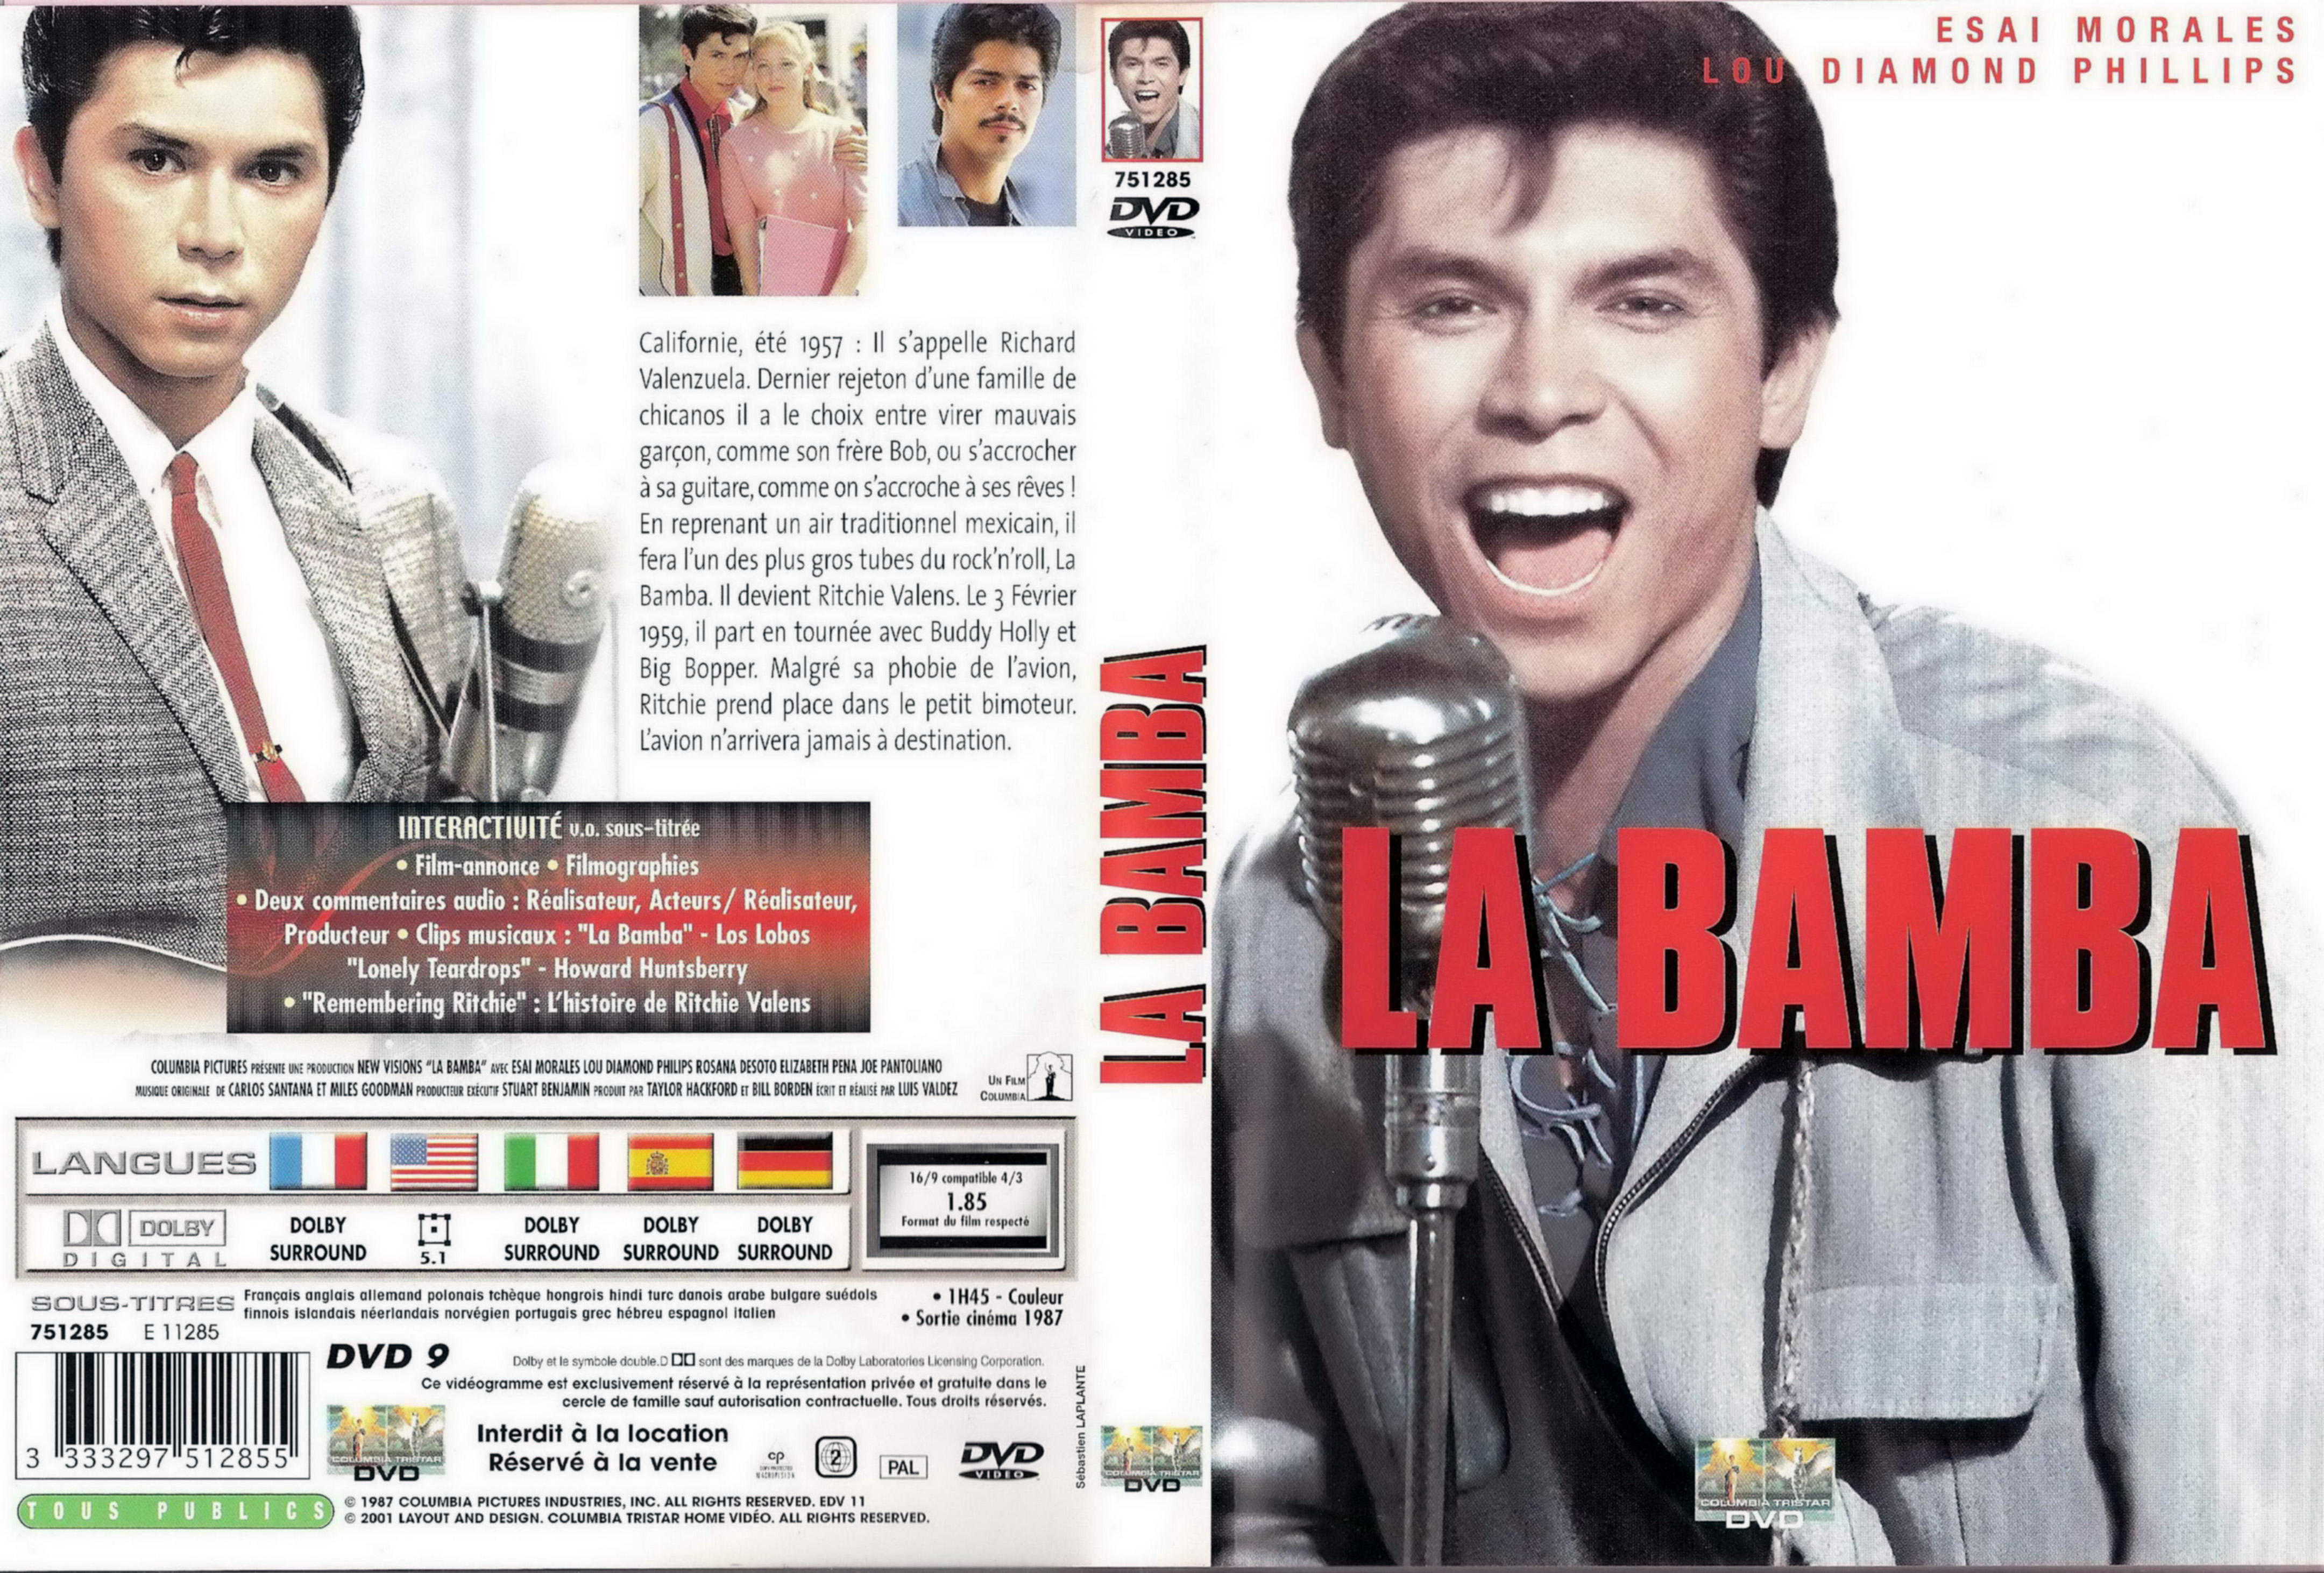 Jaquette DVD La bamba v2